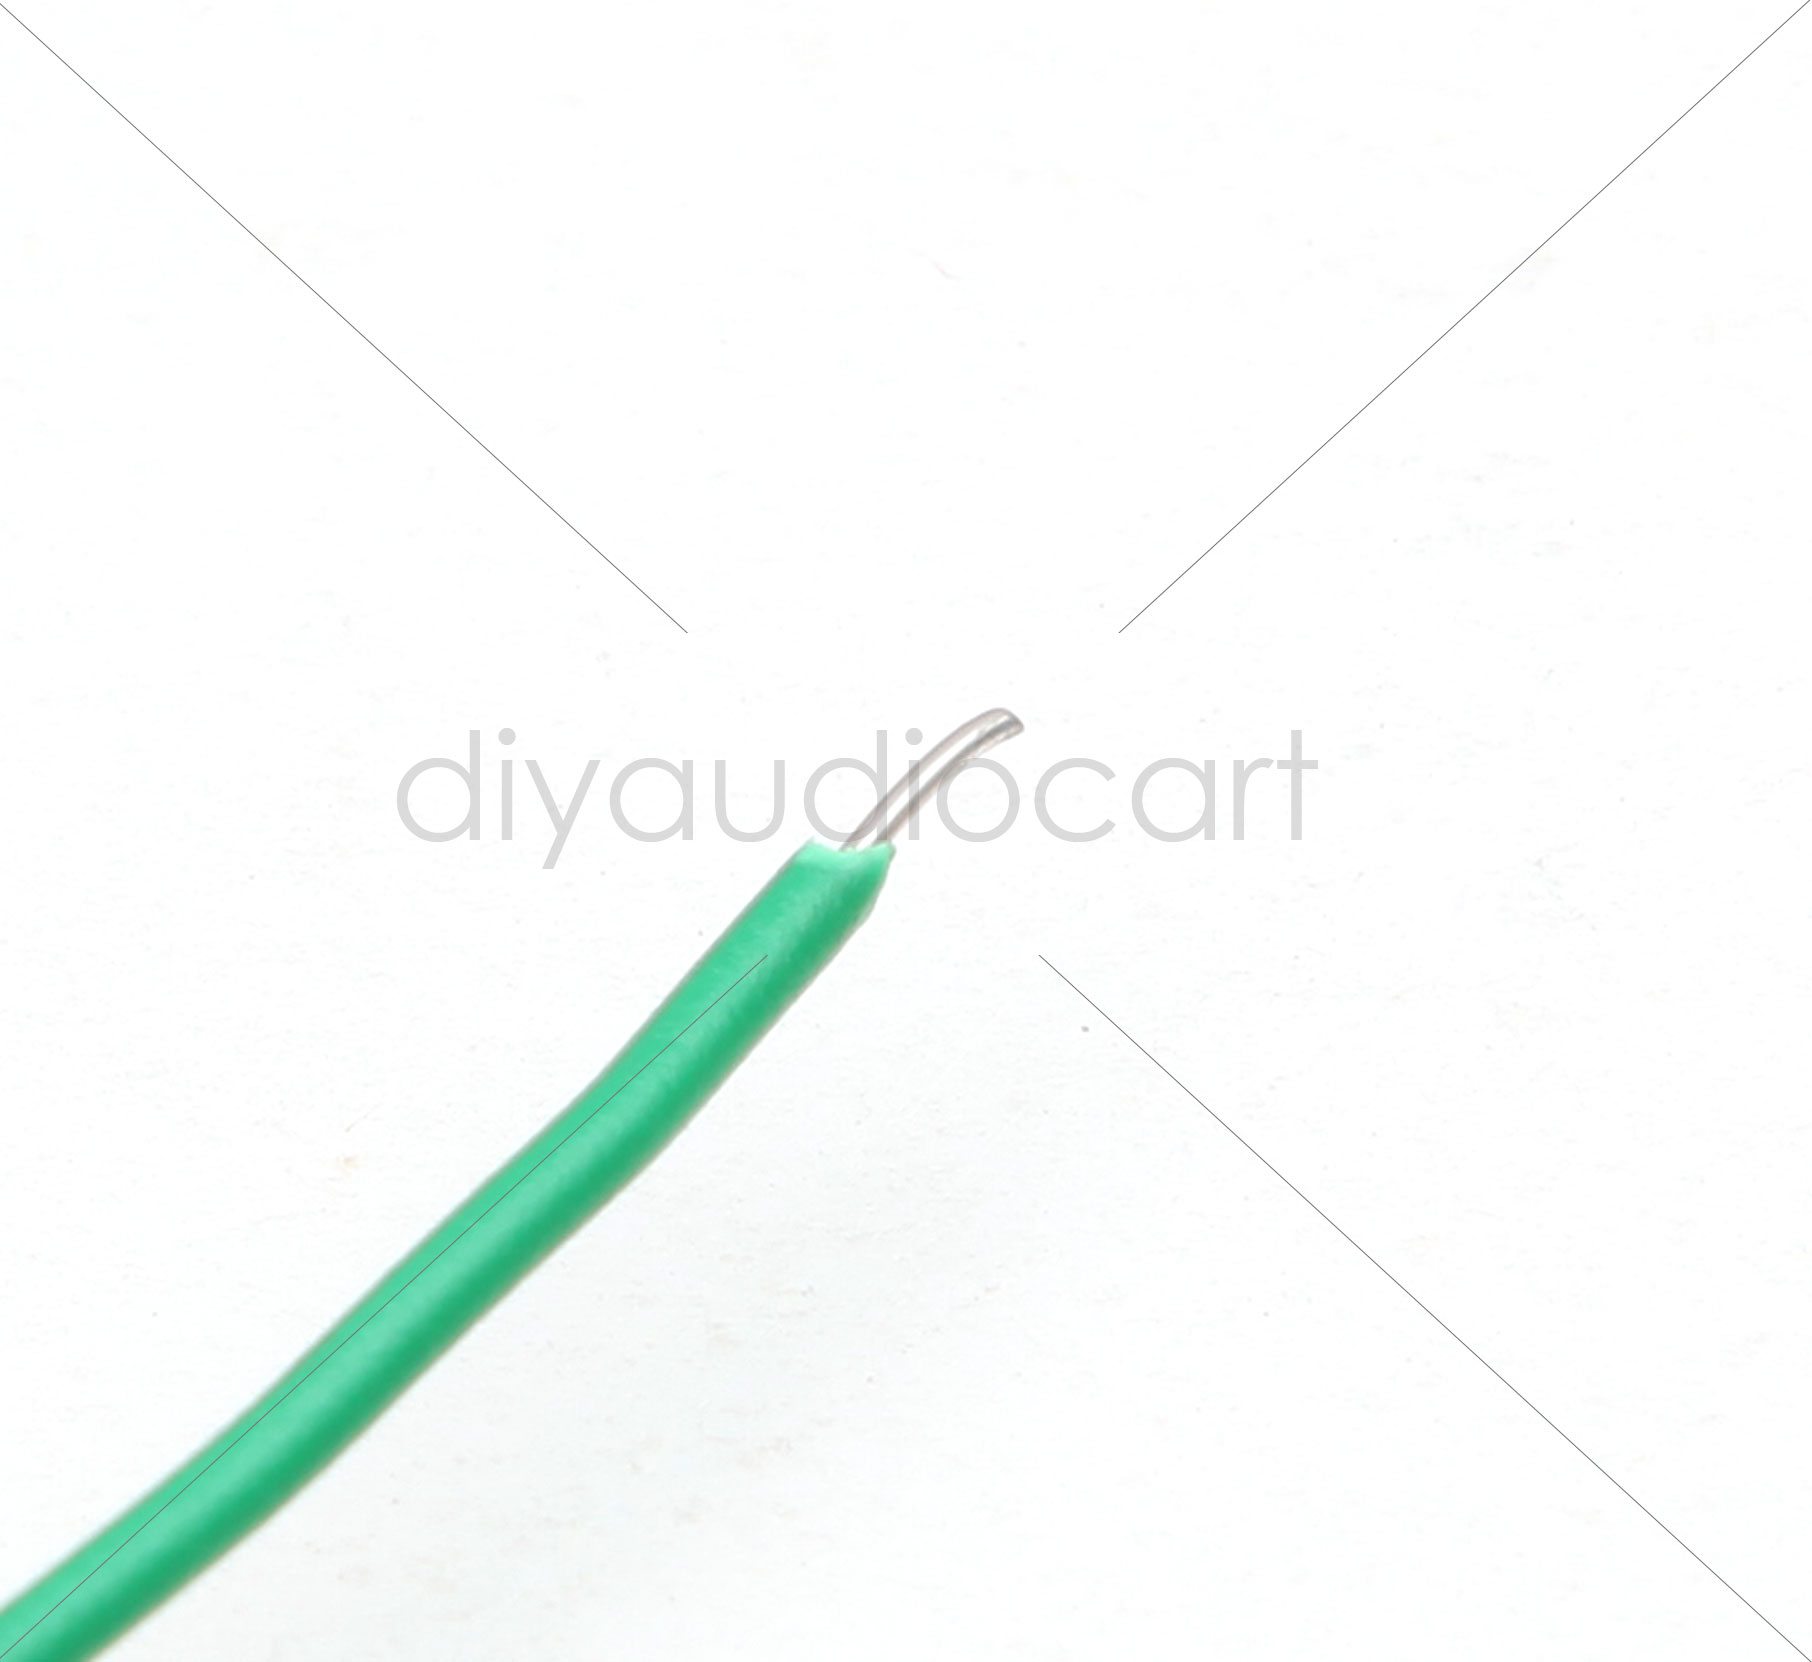 PTFE(Teflon)Hook up Wire 16 AWG Red - diyaudiocart